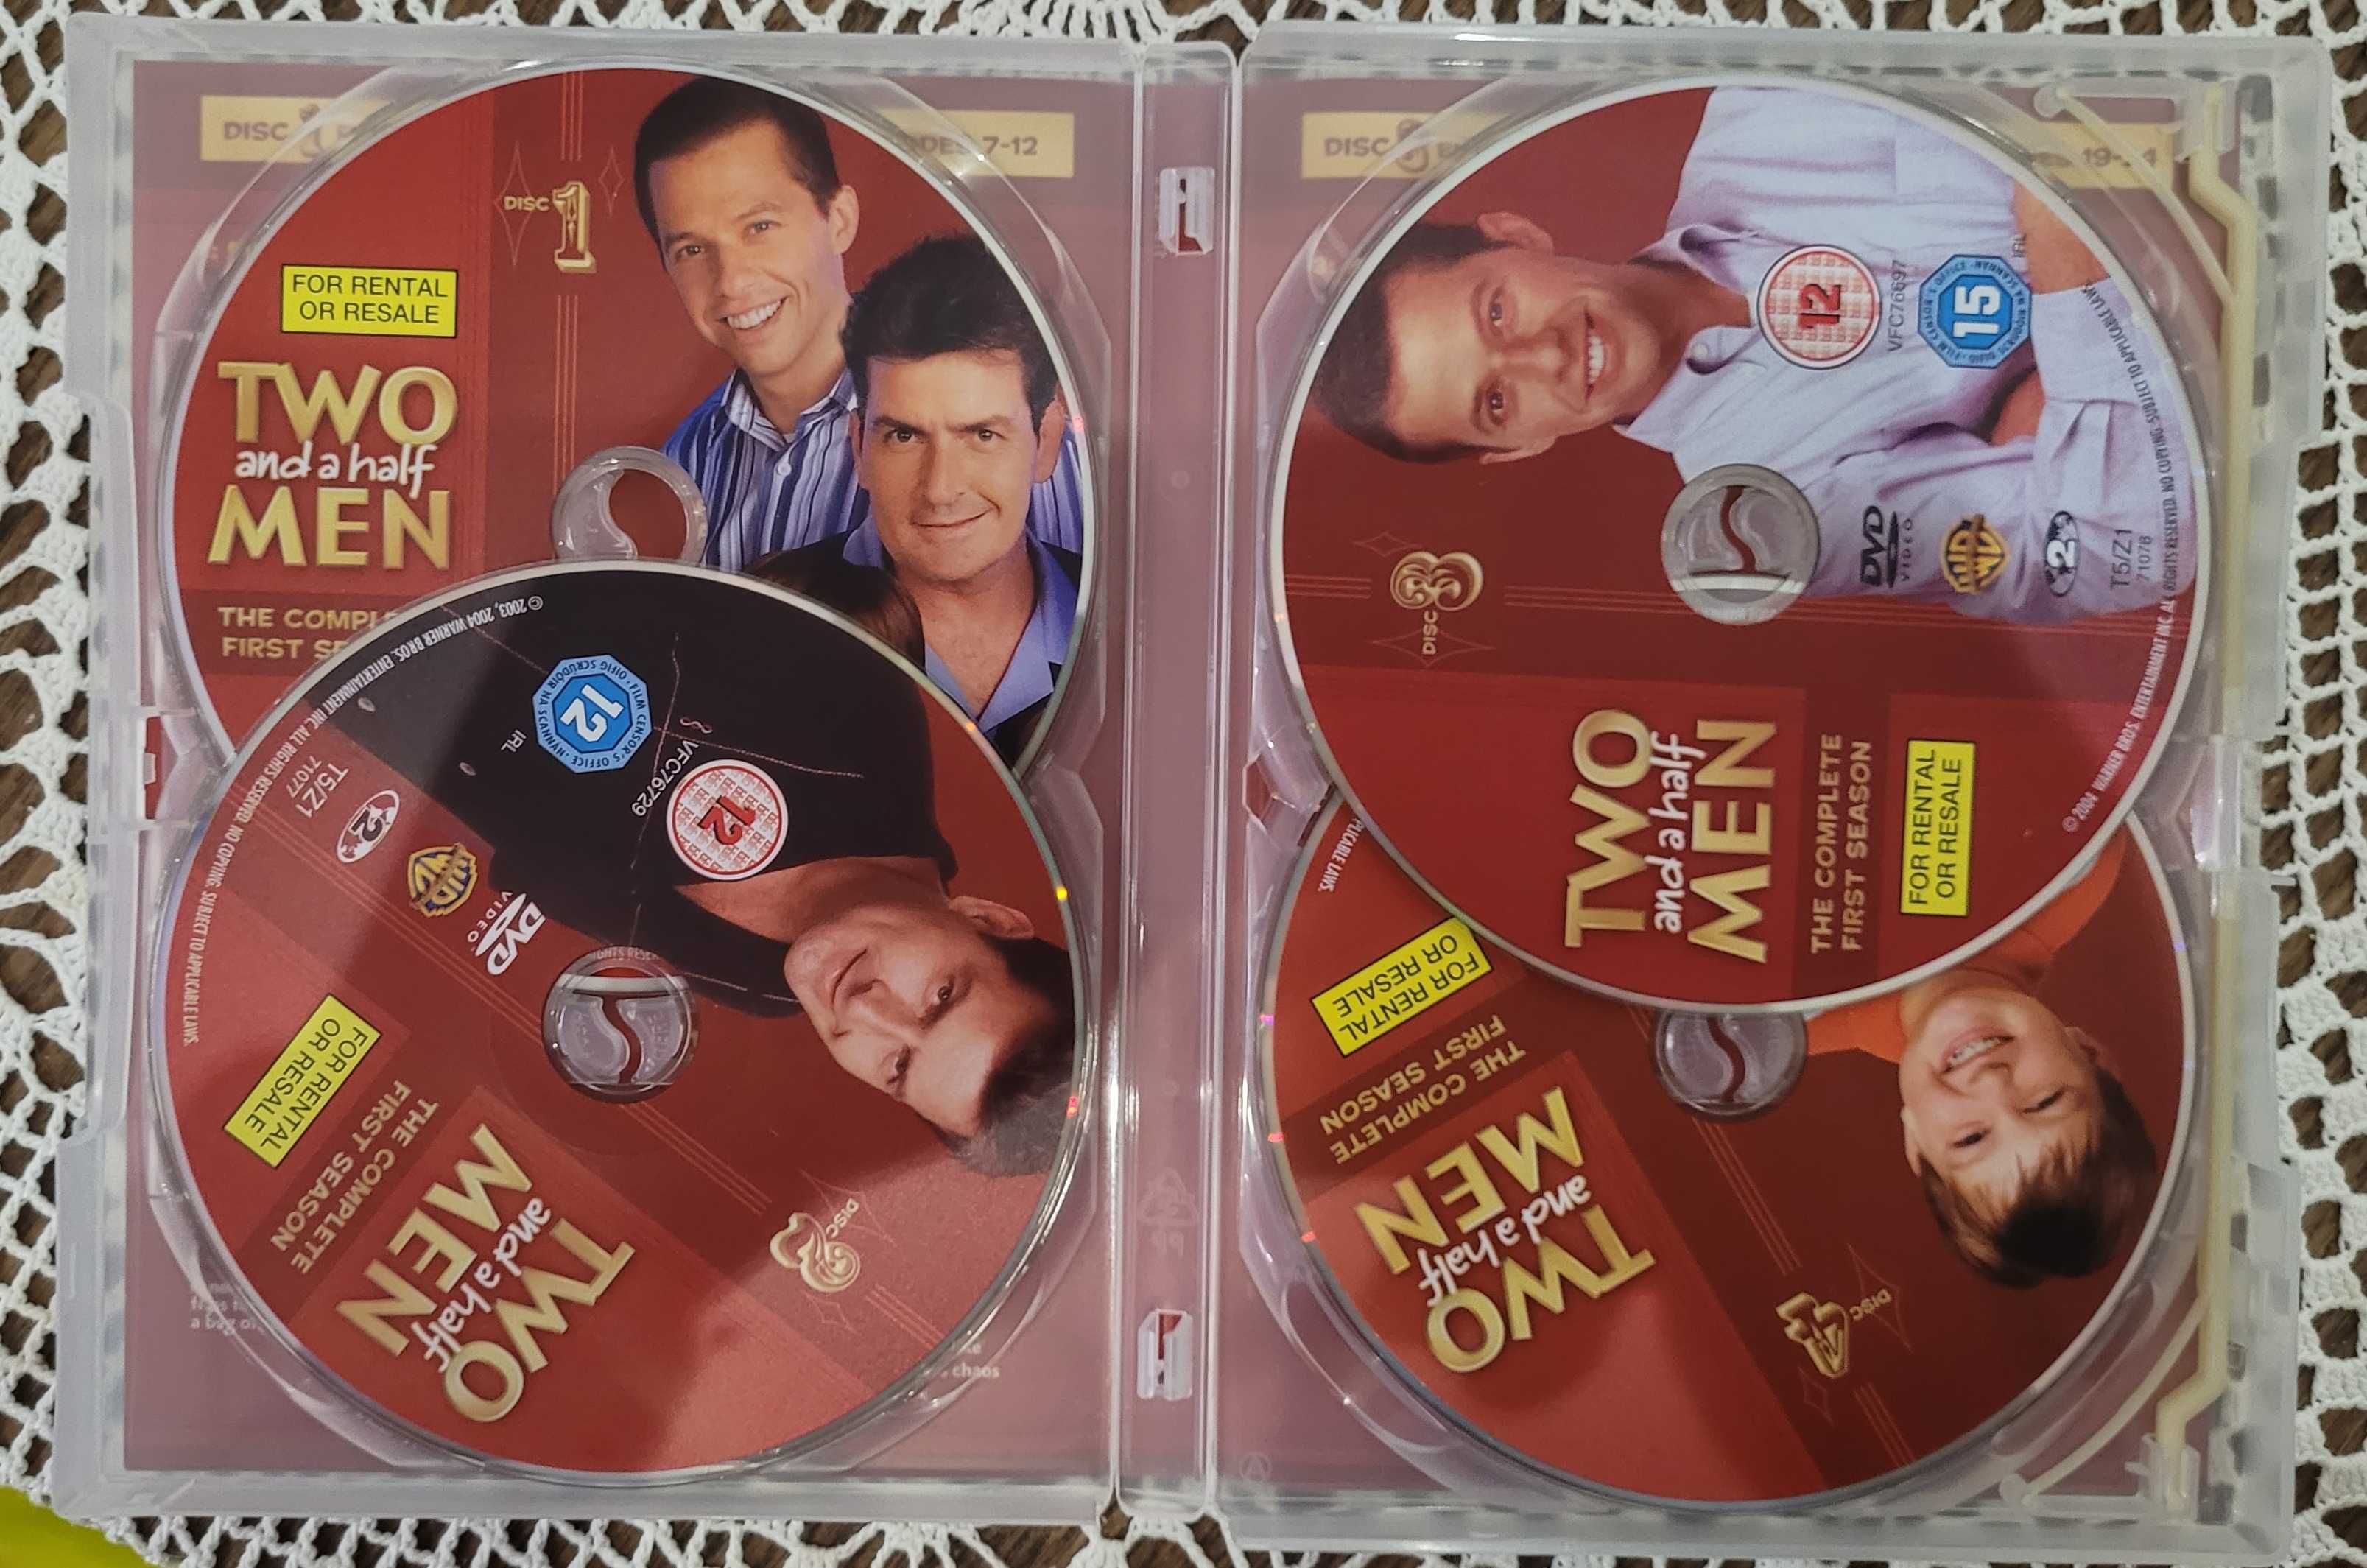 Two and a half men / Dwóch i pół sezon 1 na DVD